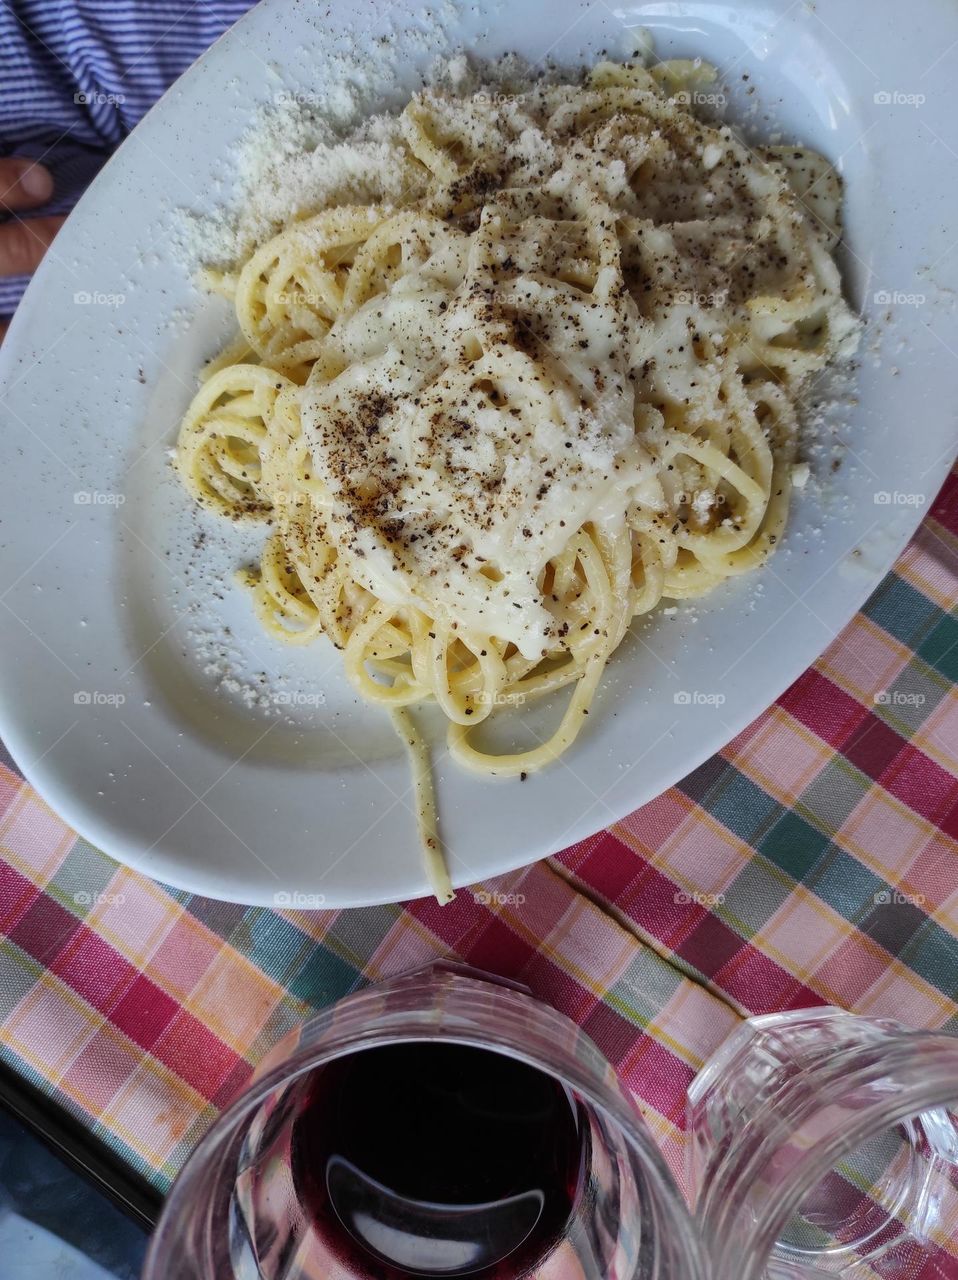 pasta alla carbonara typical of Rome